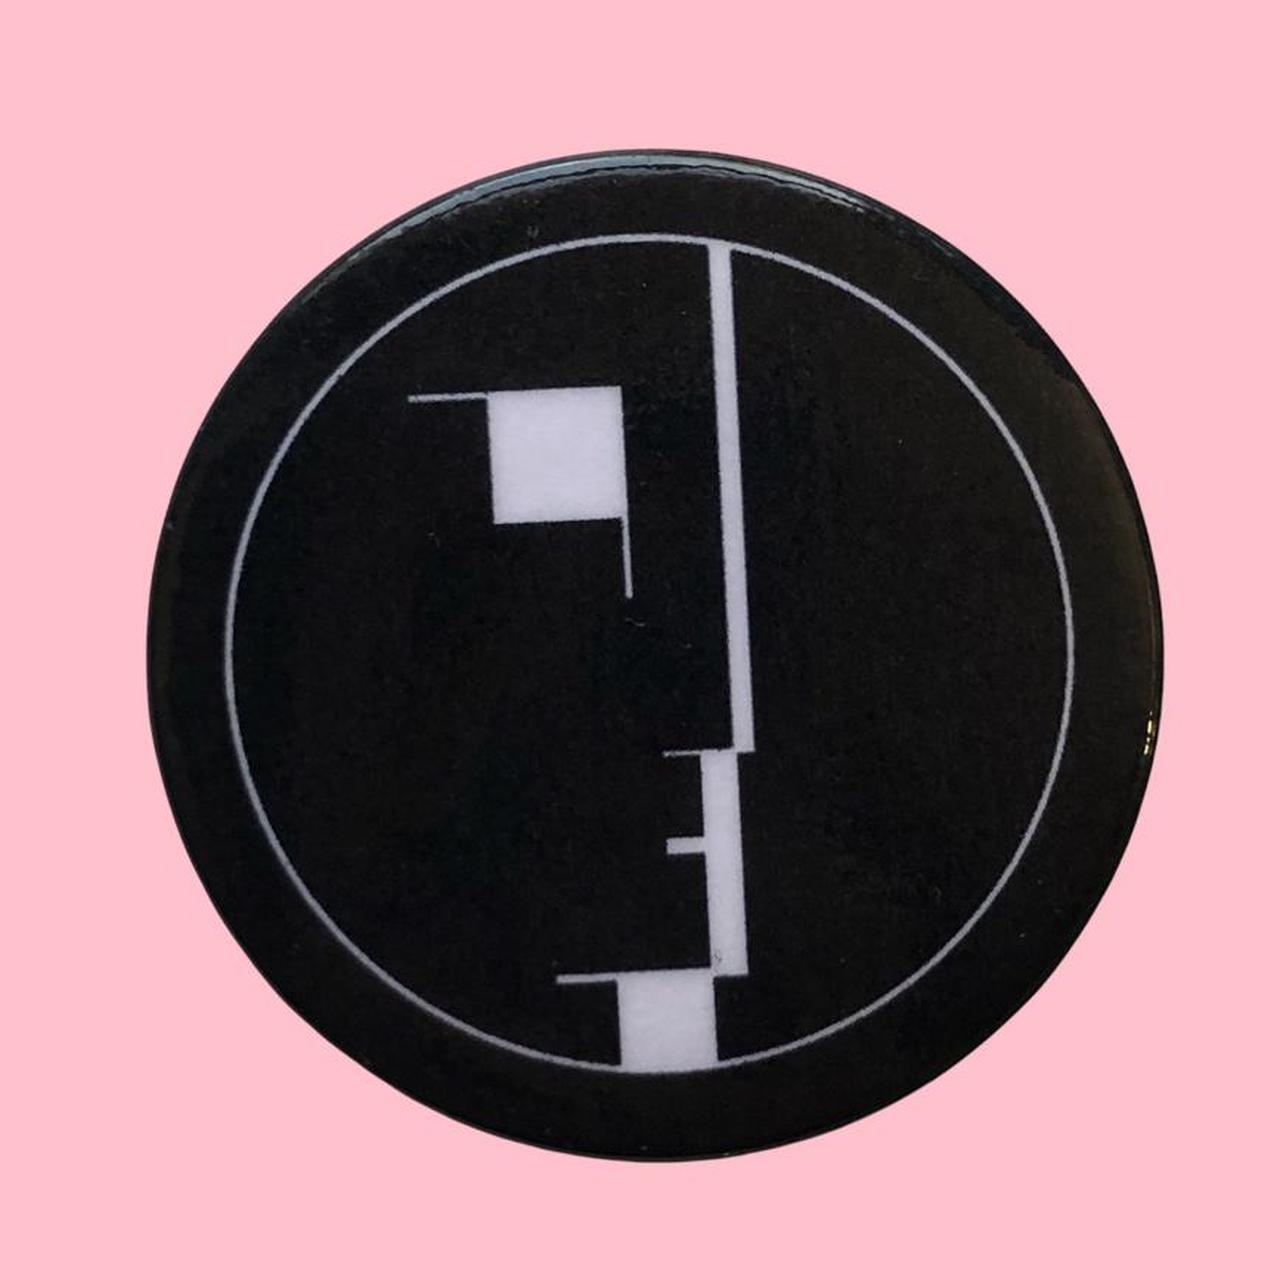 Product Image 1 - Handmade Bauhaus punk goth button